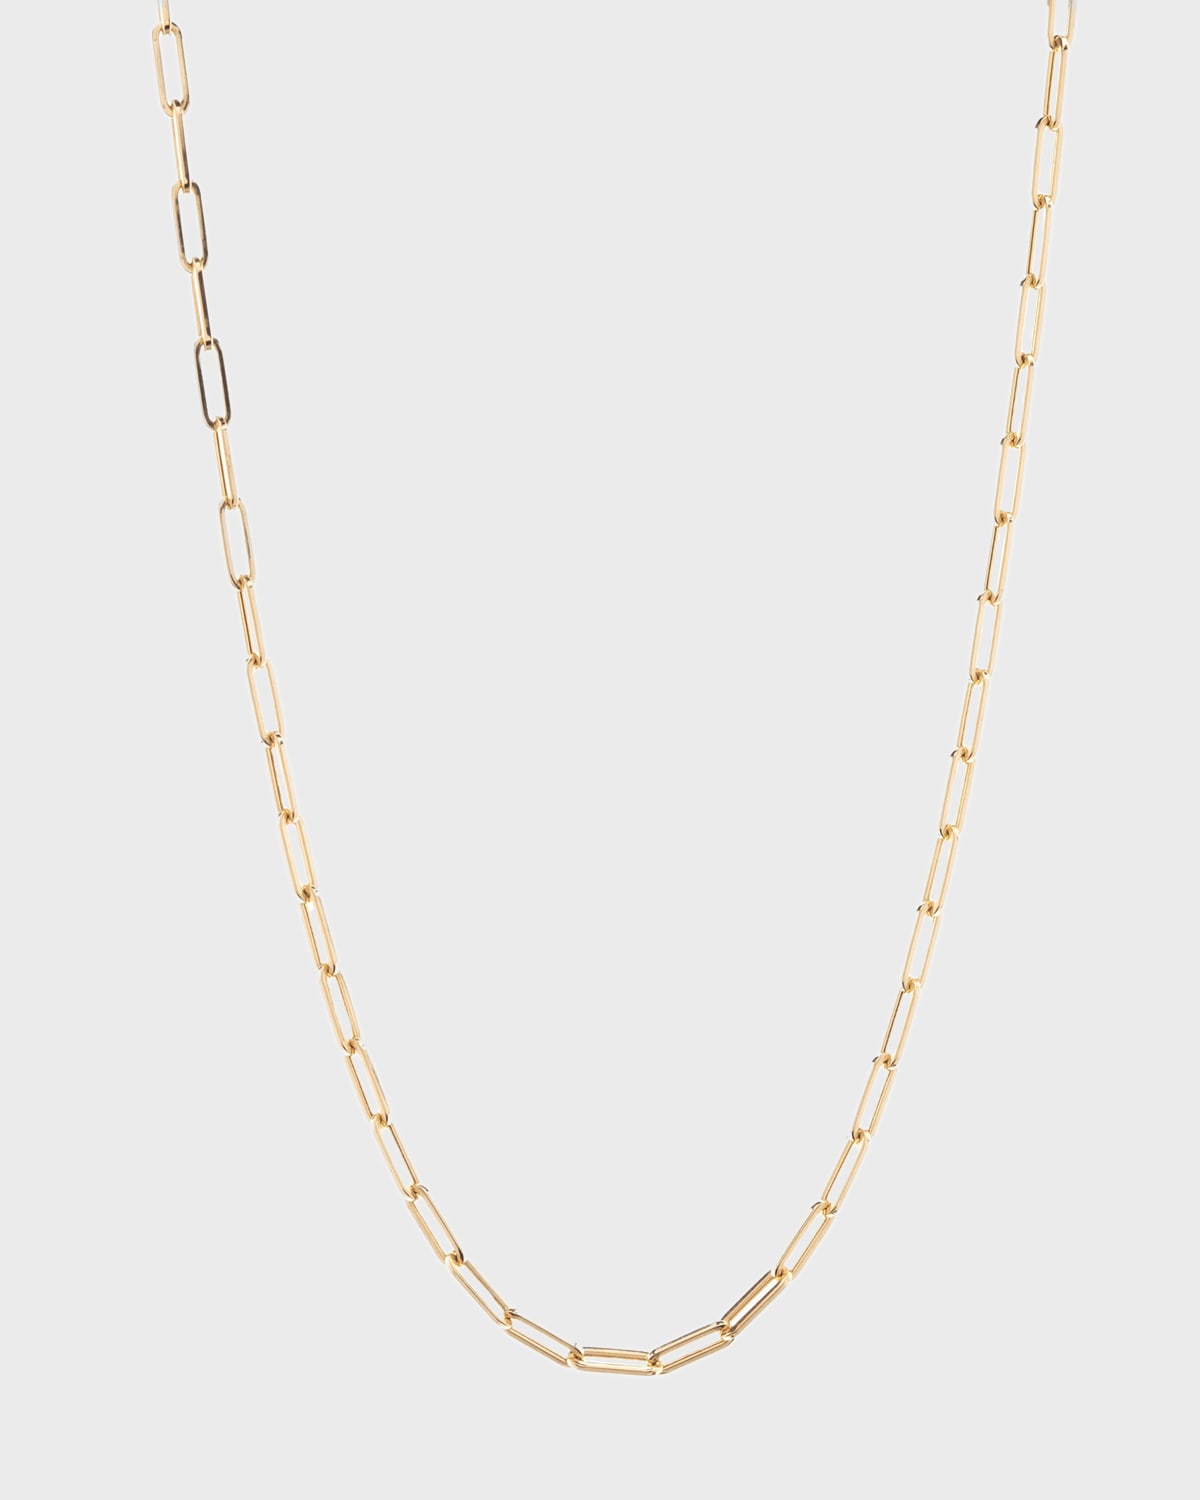 Kastel Jewelry La Seta 14k Rose Gold XS Link Necklace, 16"L